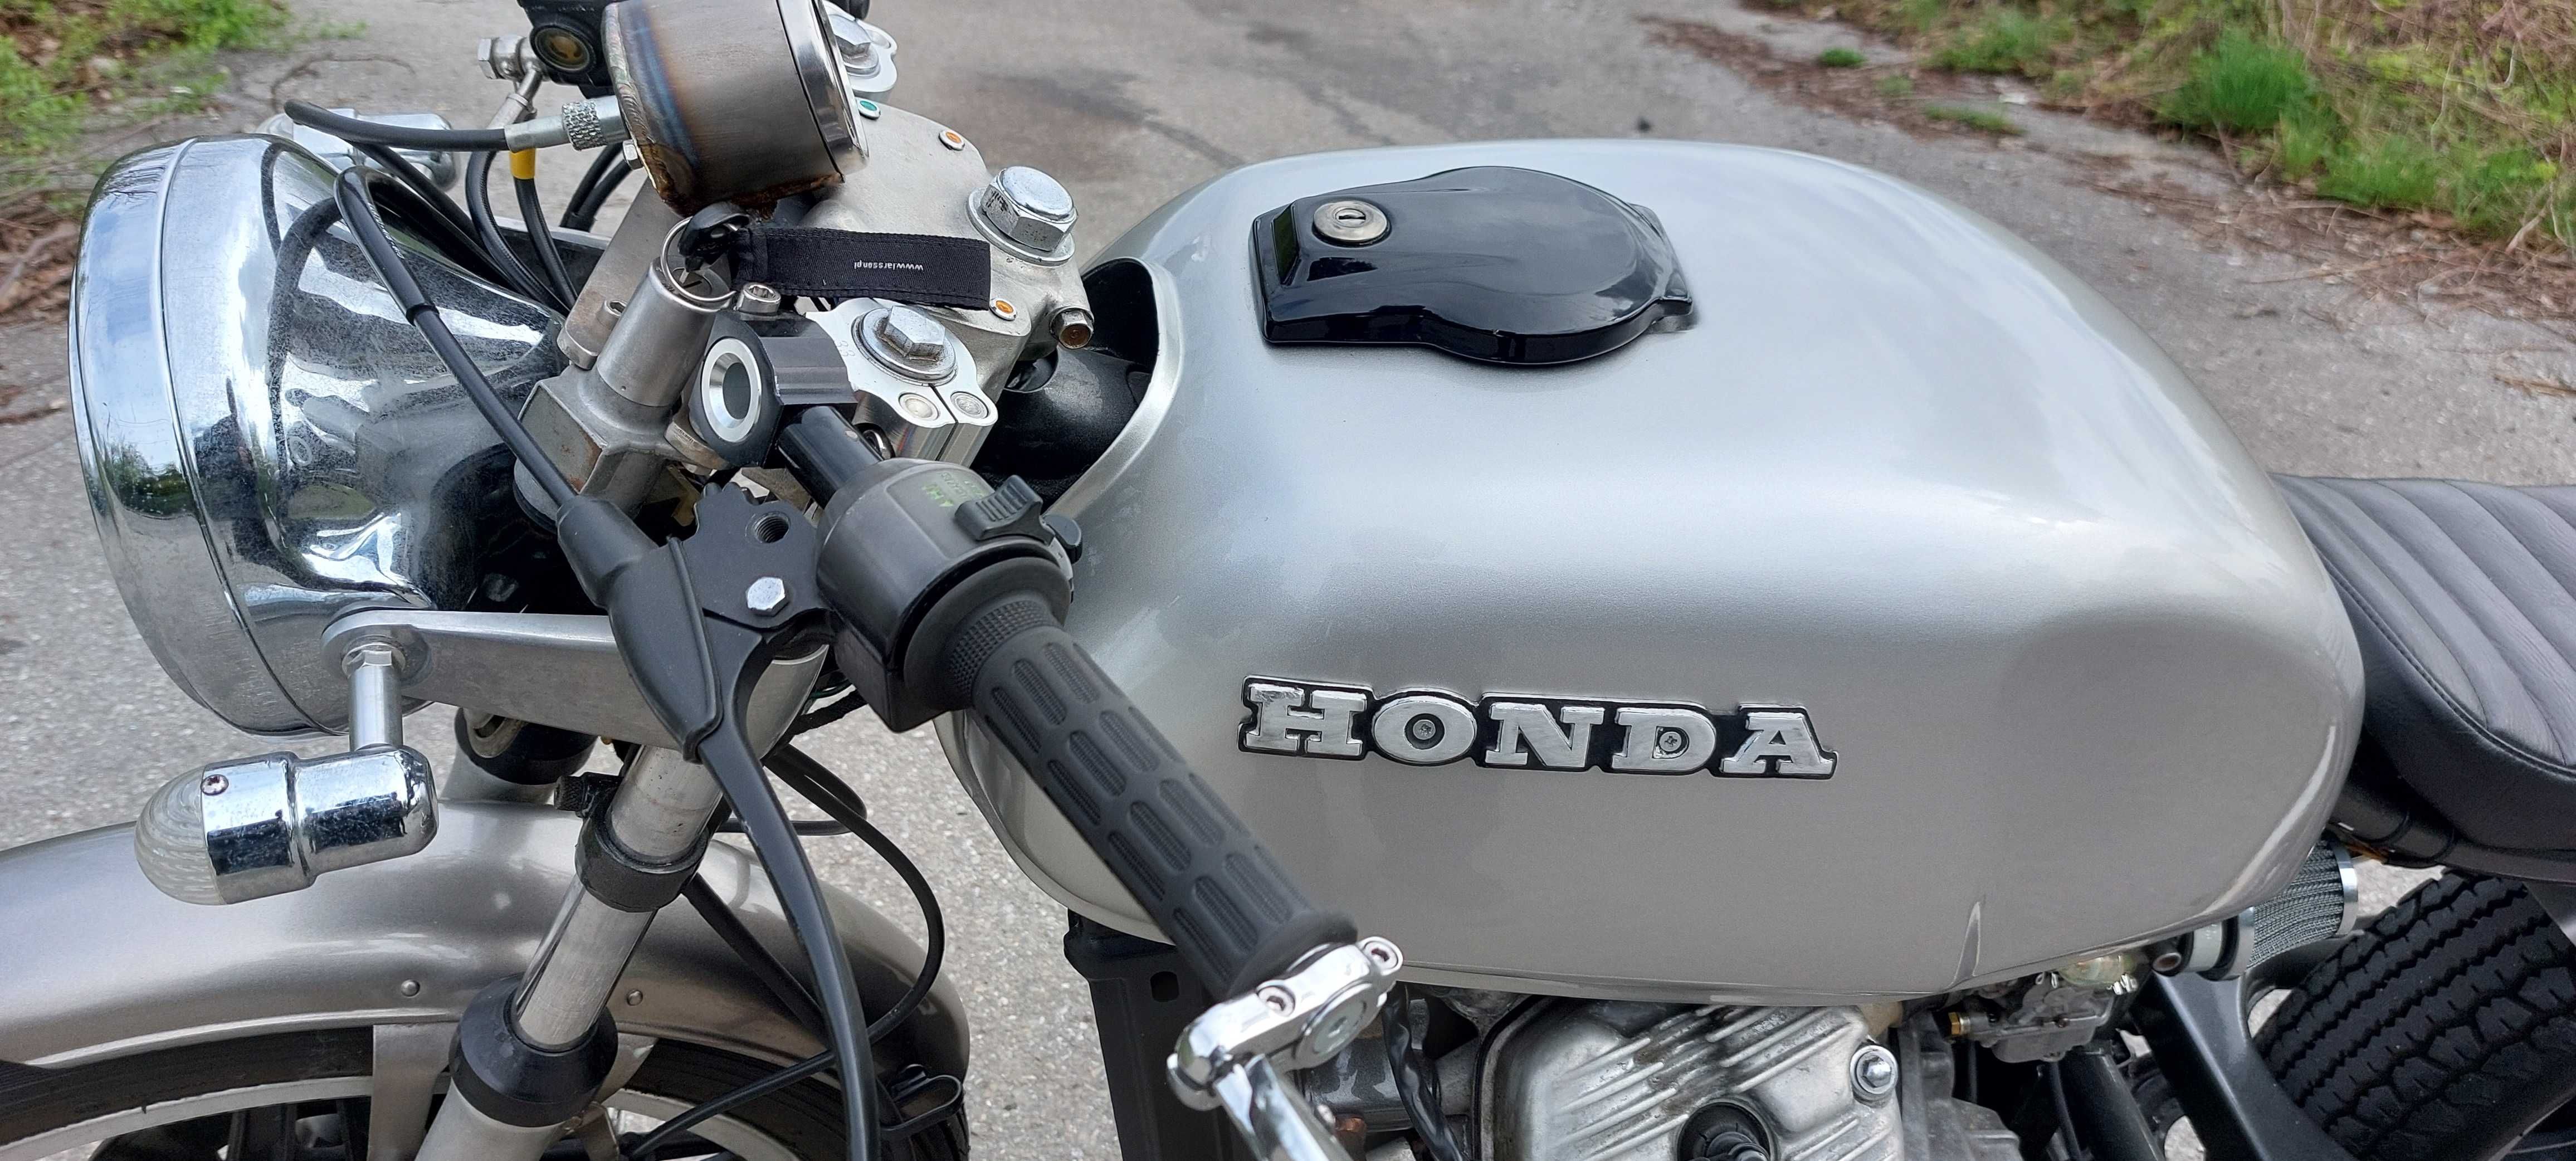 Honda cx500 81 Racer